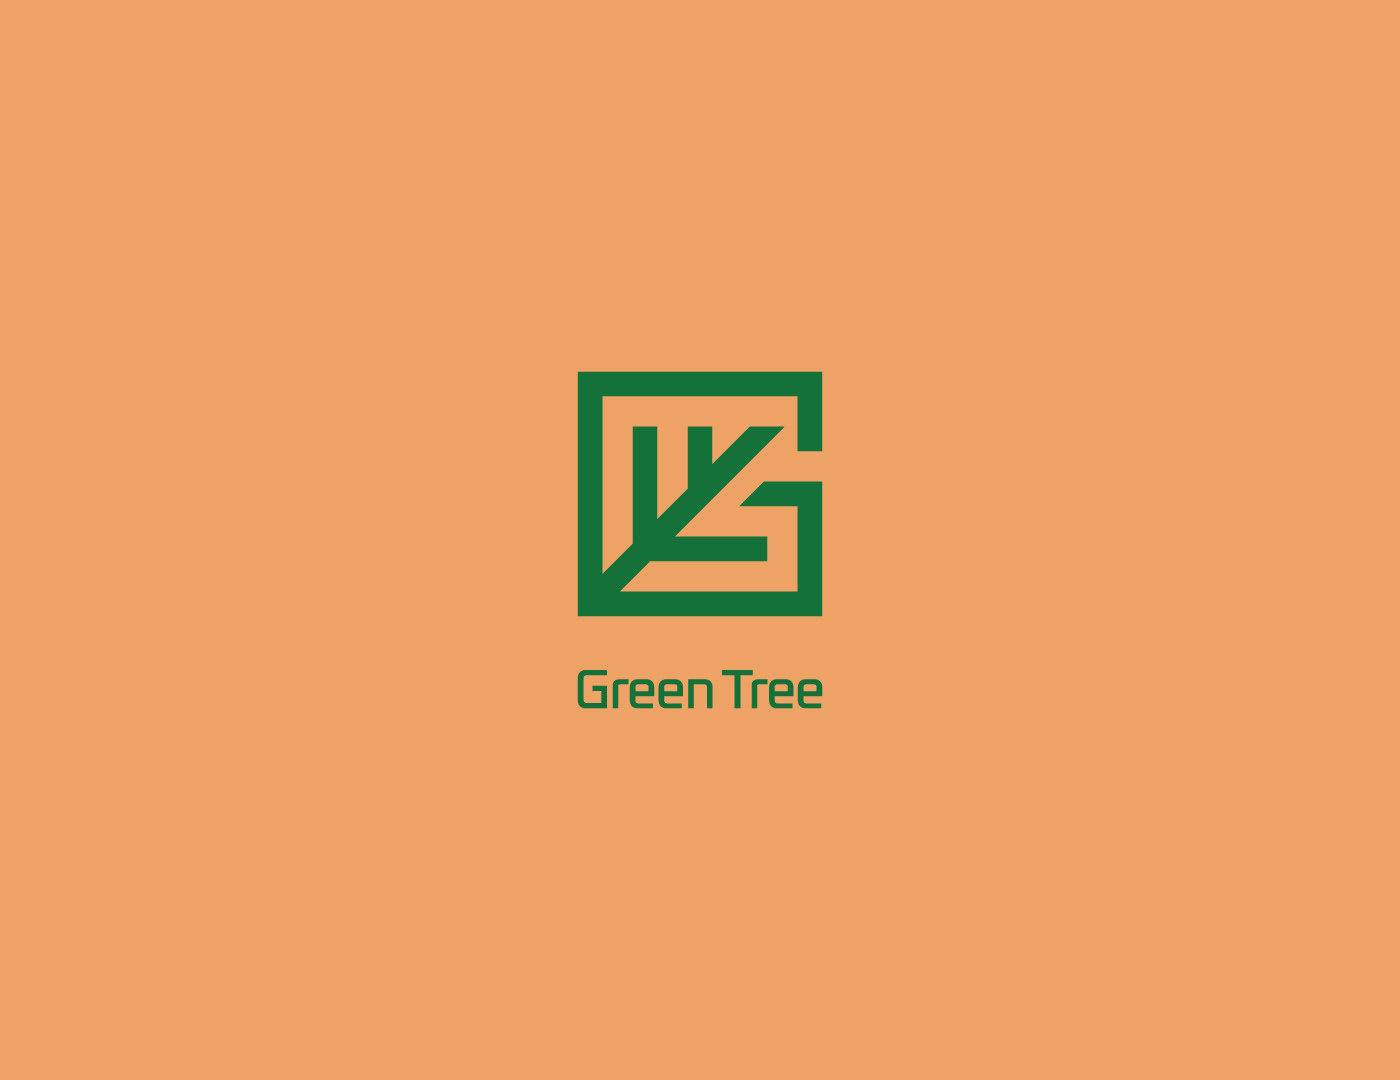 Non-profit organization logo and branding design